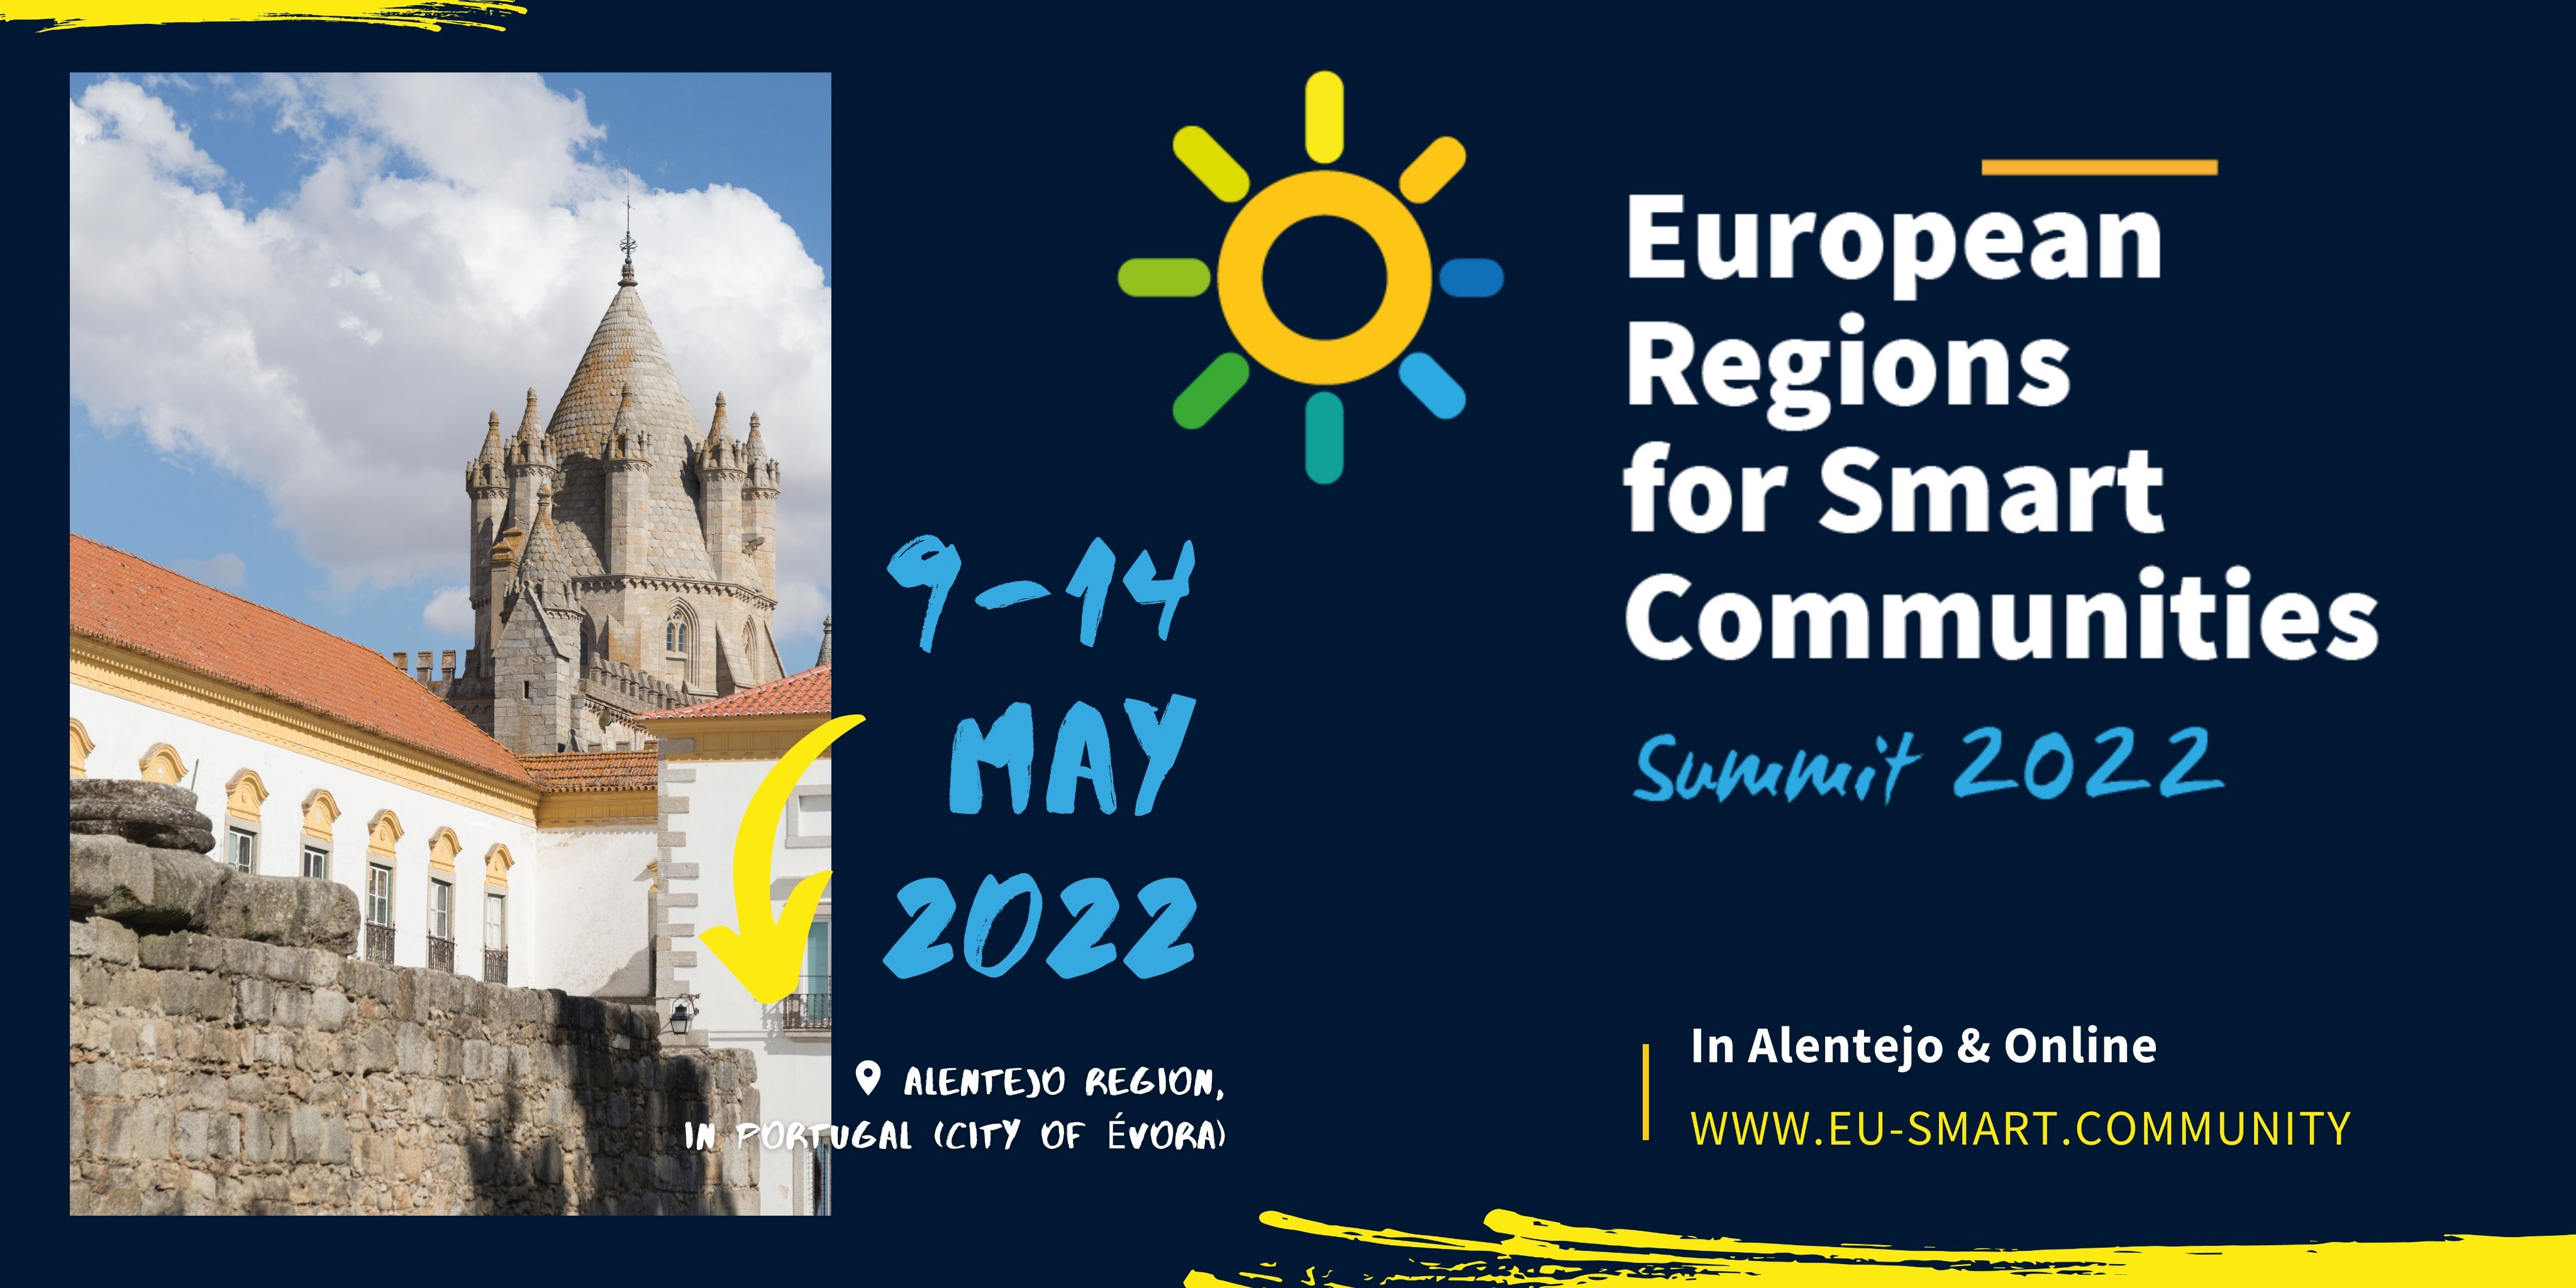 European Regions for Smart Communities Summit